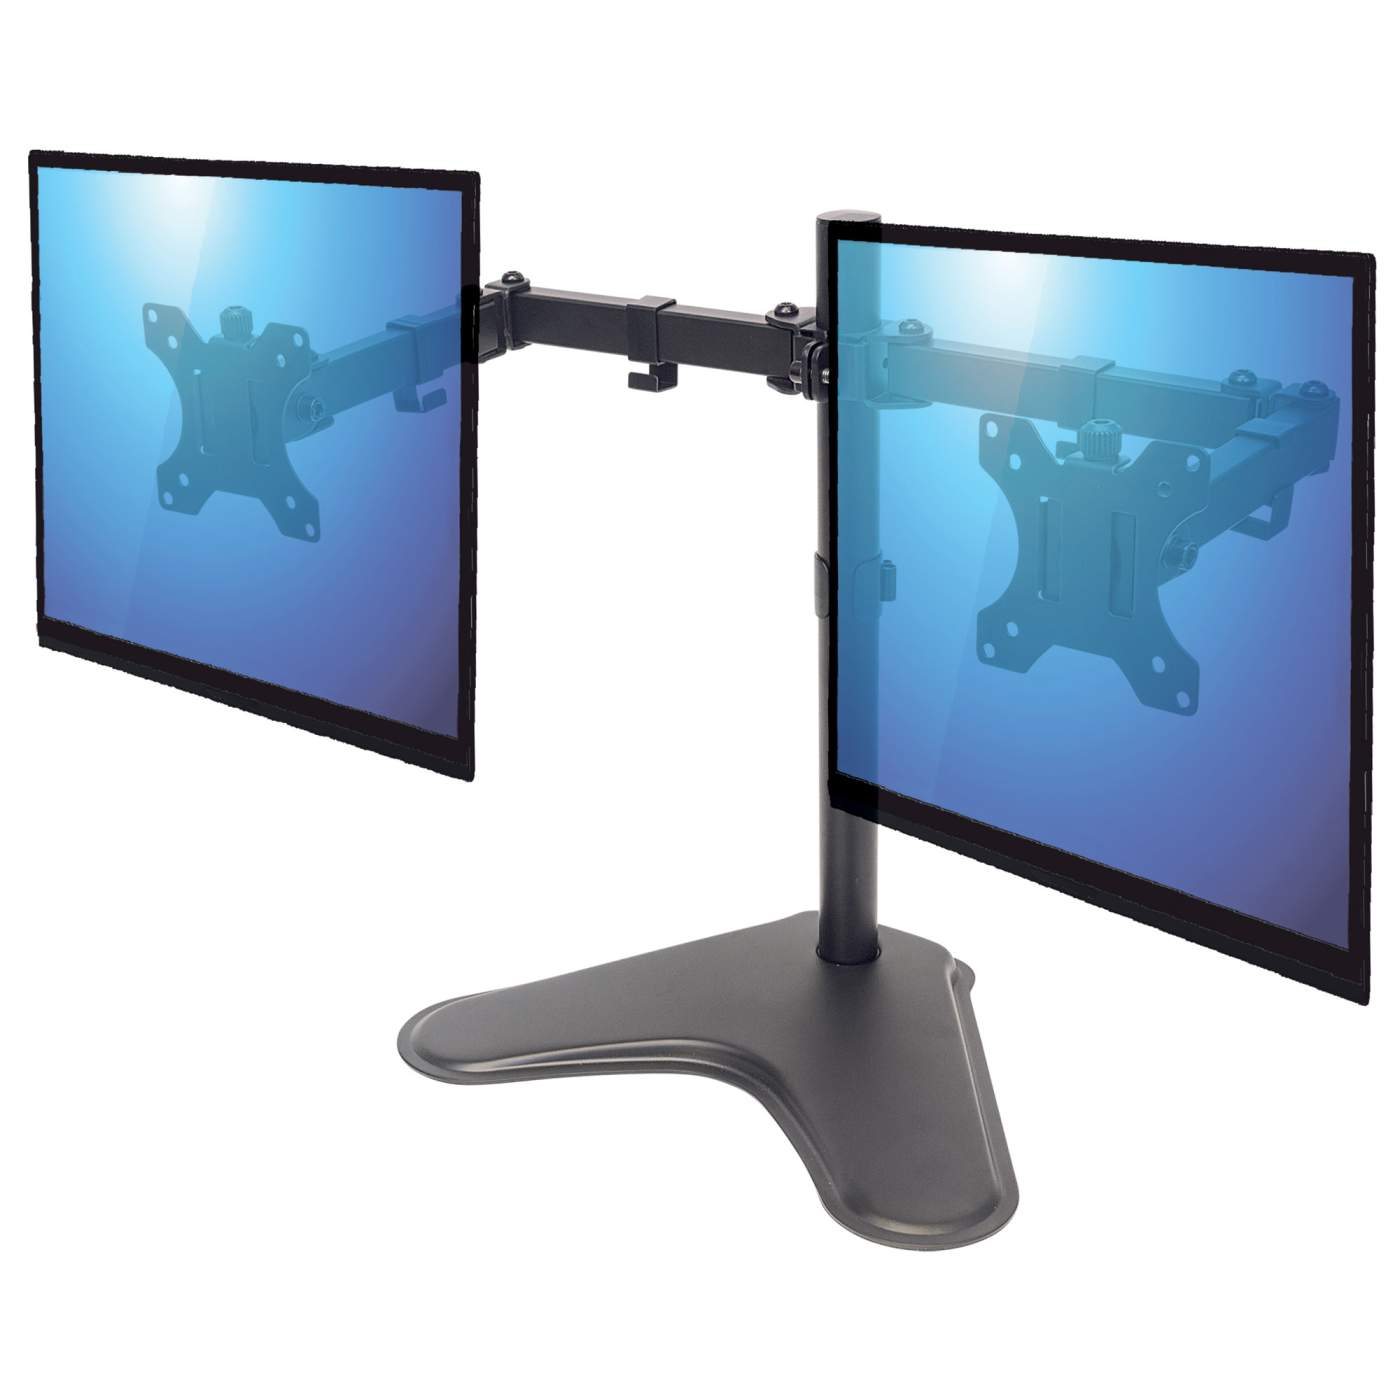 Soporte para dos monitores, movimiento con brazos de doble articulación